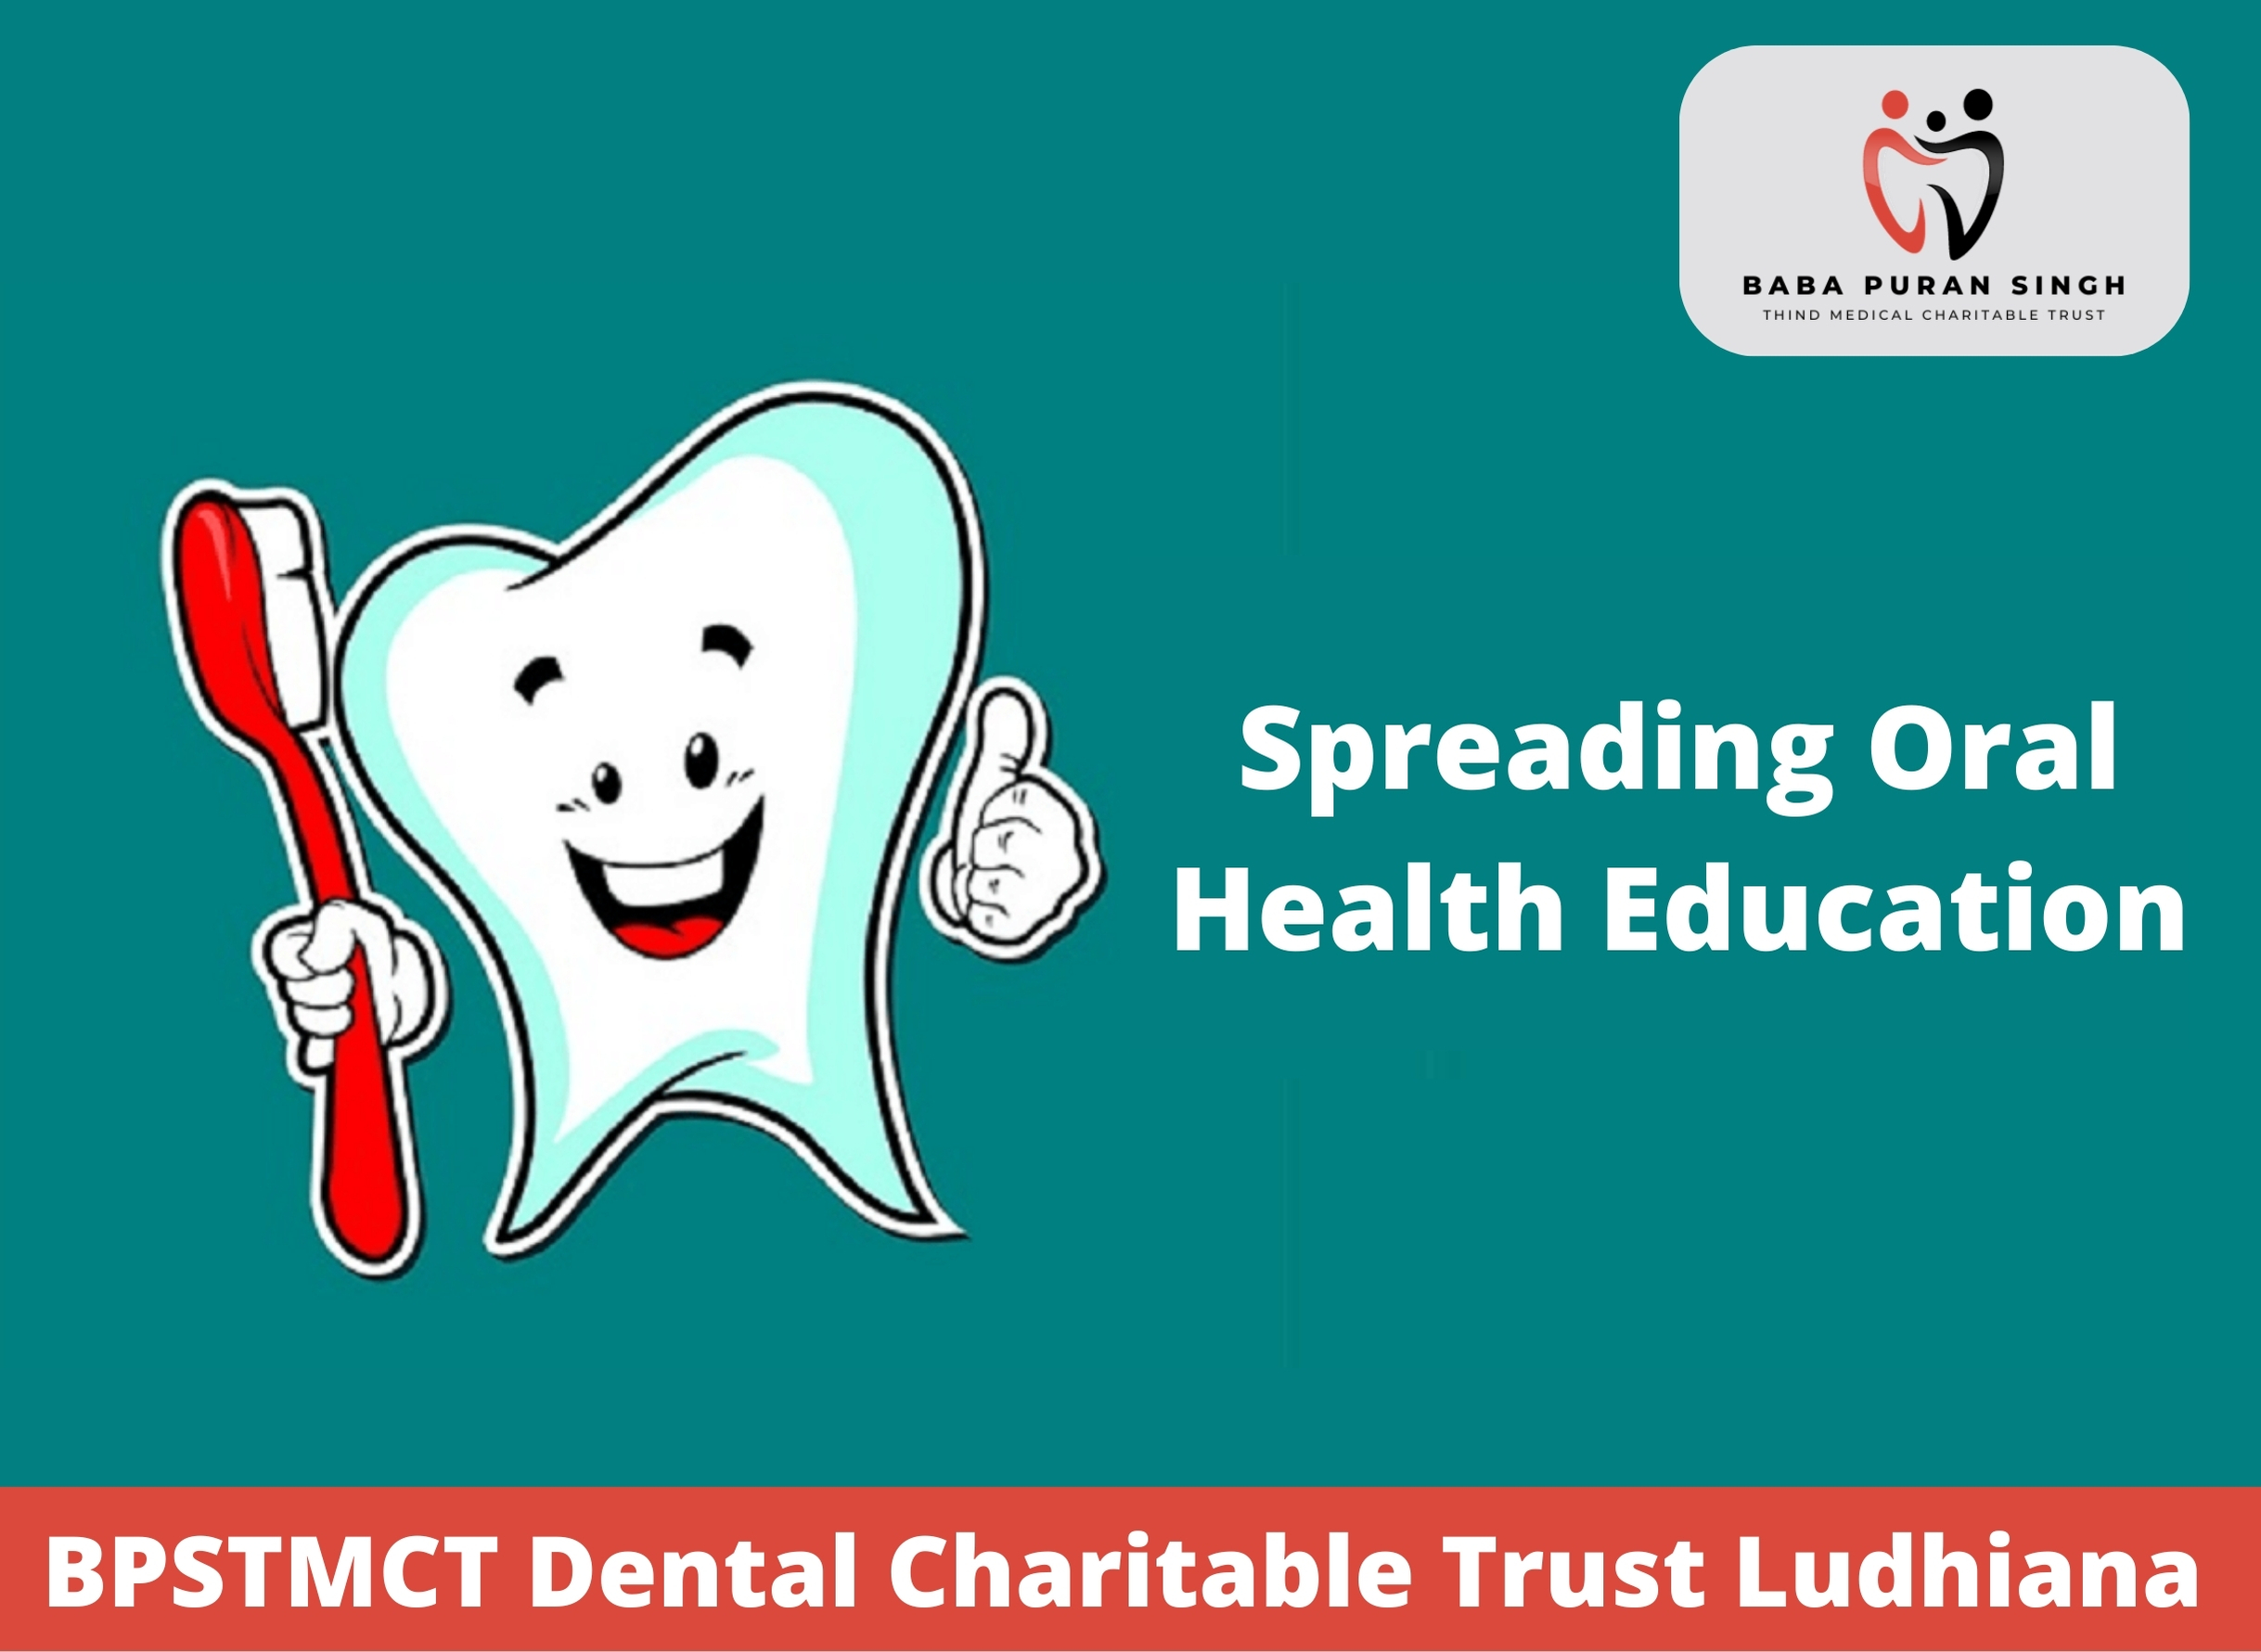 Spreading Oral Health Education: BPSTMCT Dental Trust in Ludhiana